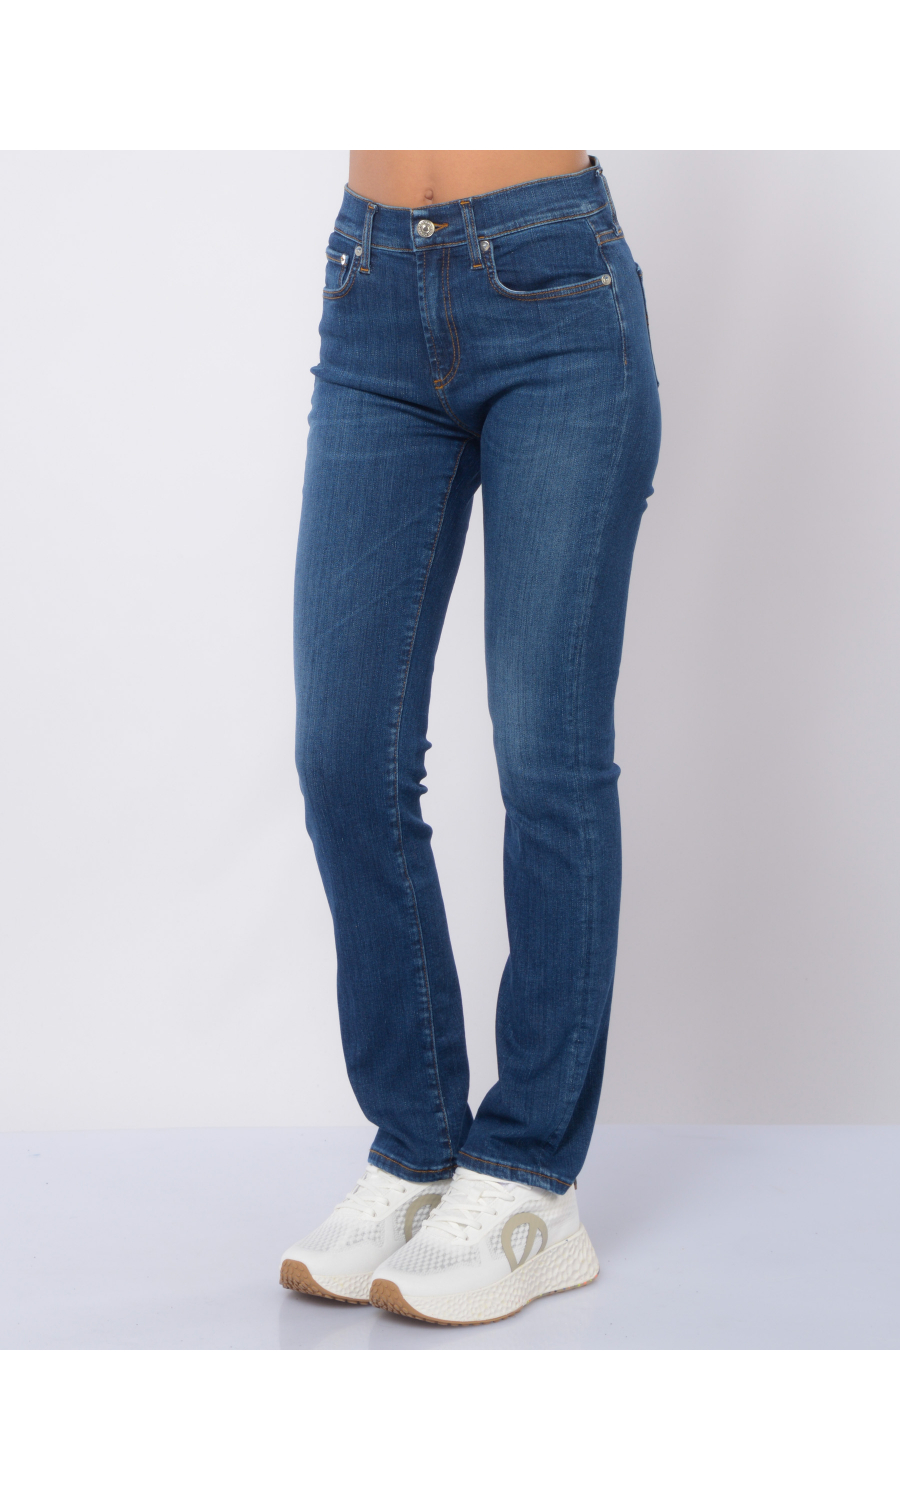 jeans da donna Roy Roger's cinque tasche Slim Fit